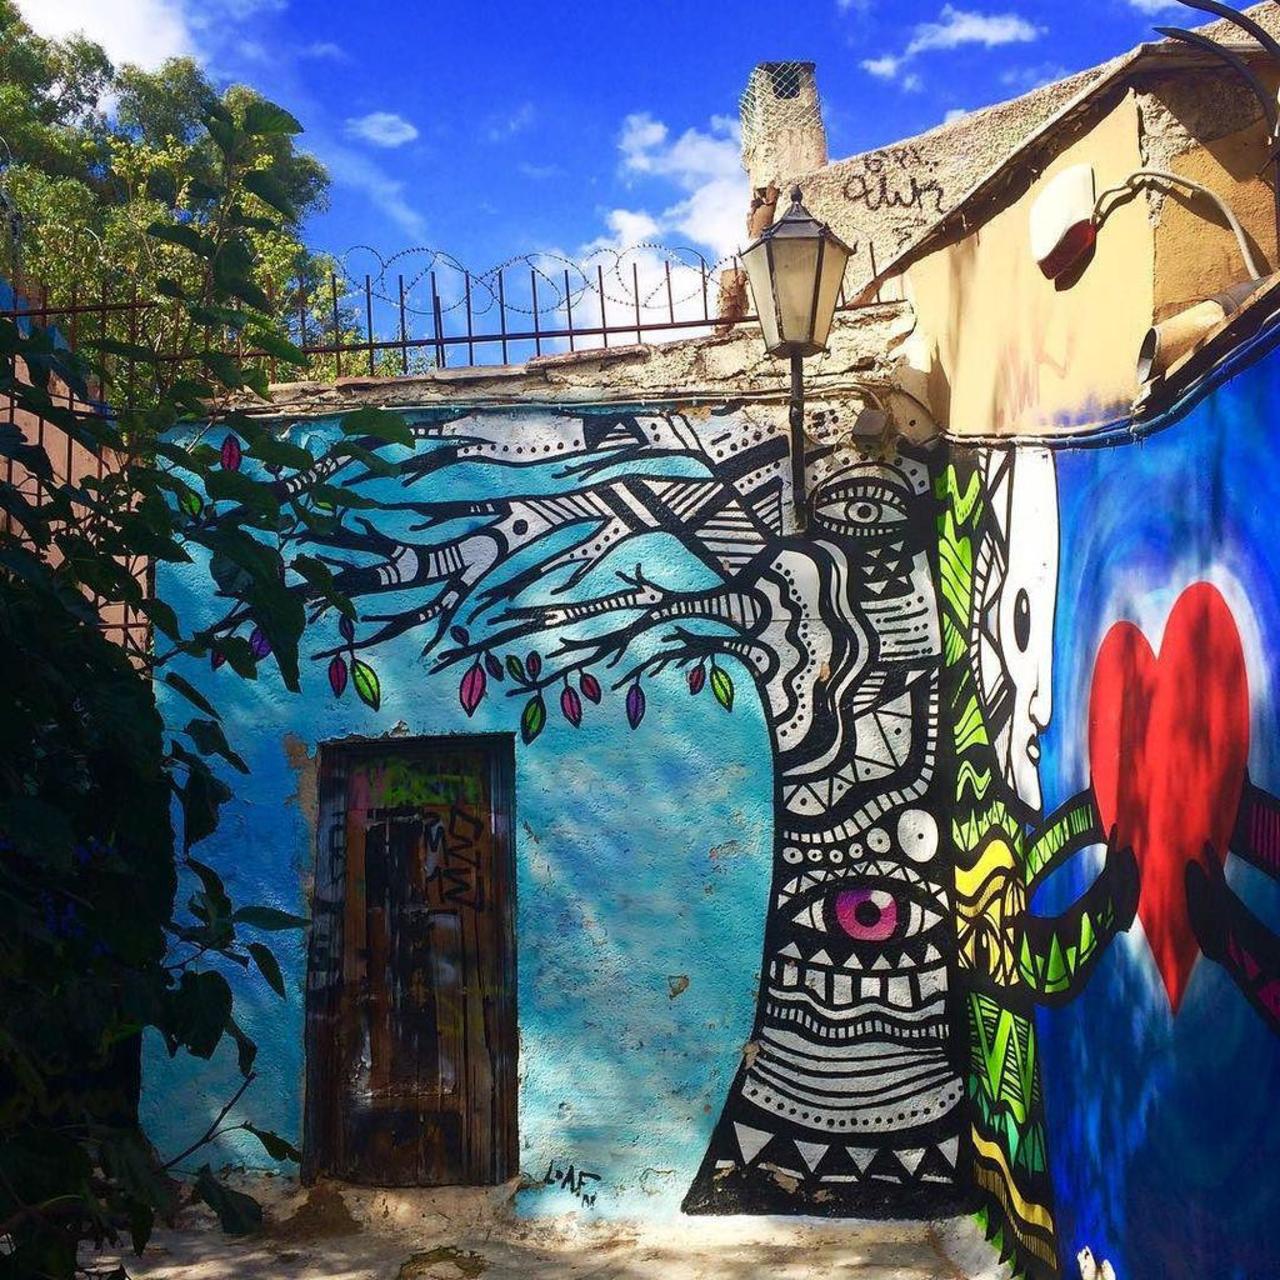 #athens #greece #travel #graffiti #streetart #colors #plaka #plakaathens by efcikkk http://ift.tt/1jfFMjx http://t.co/G2g4dK8gDF